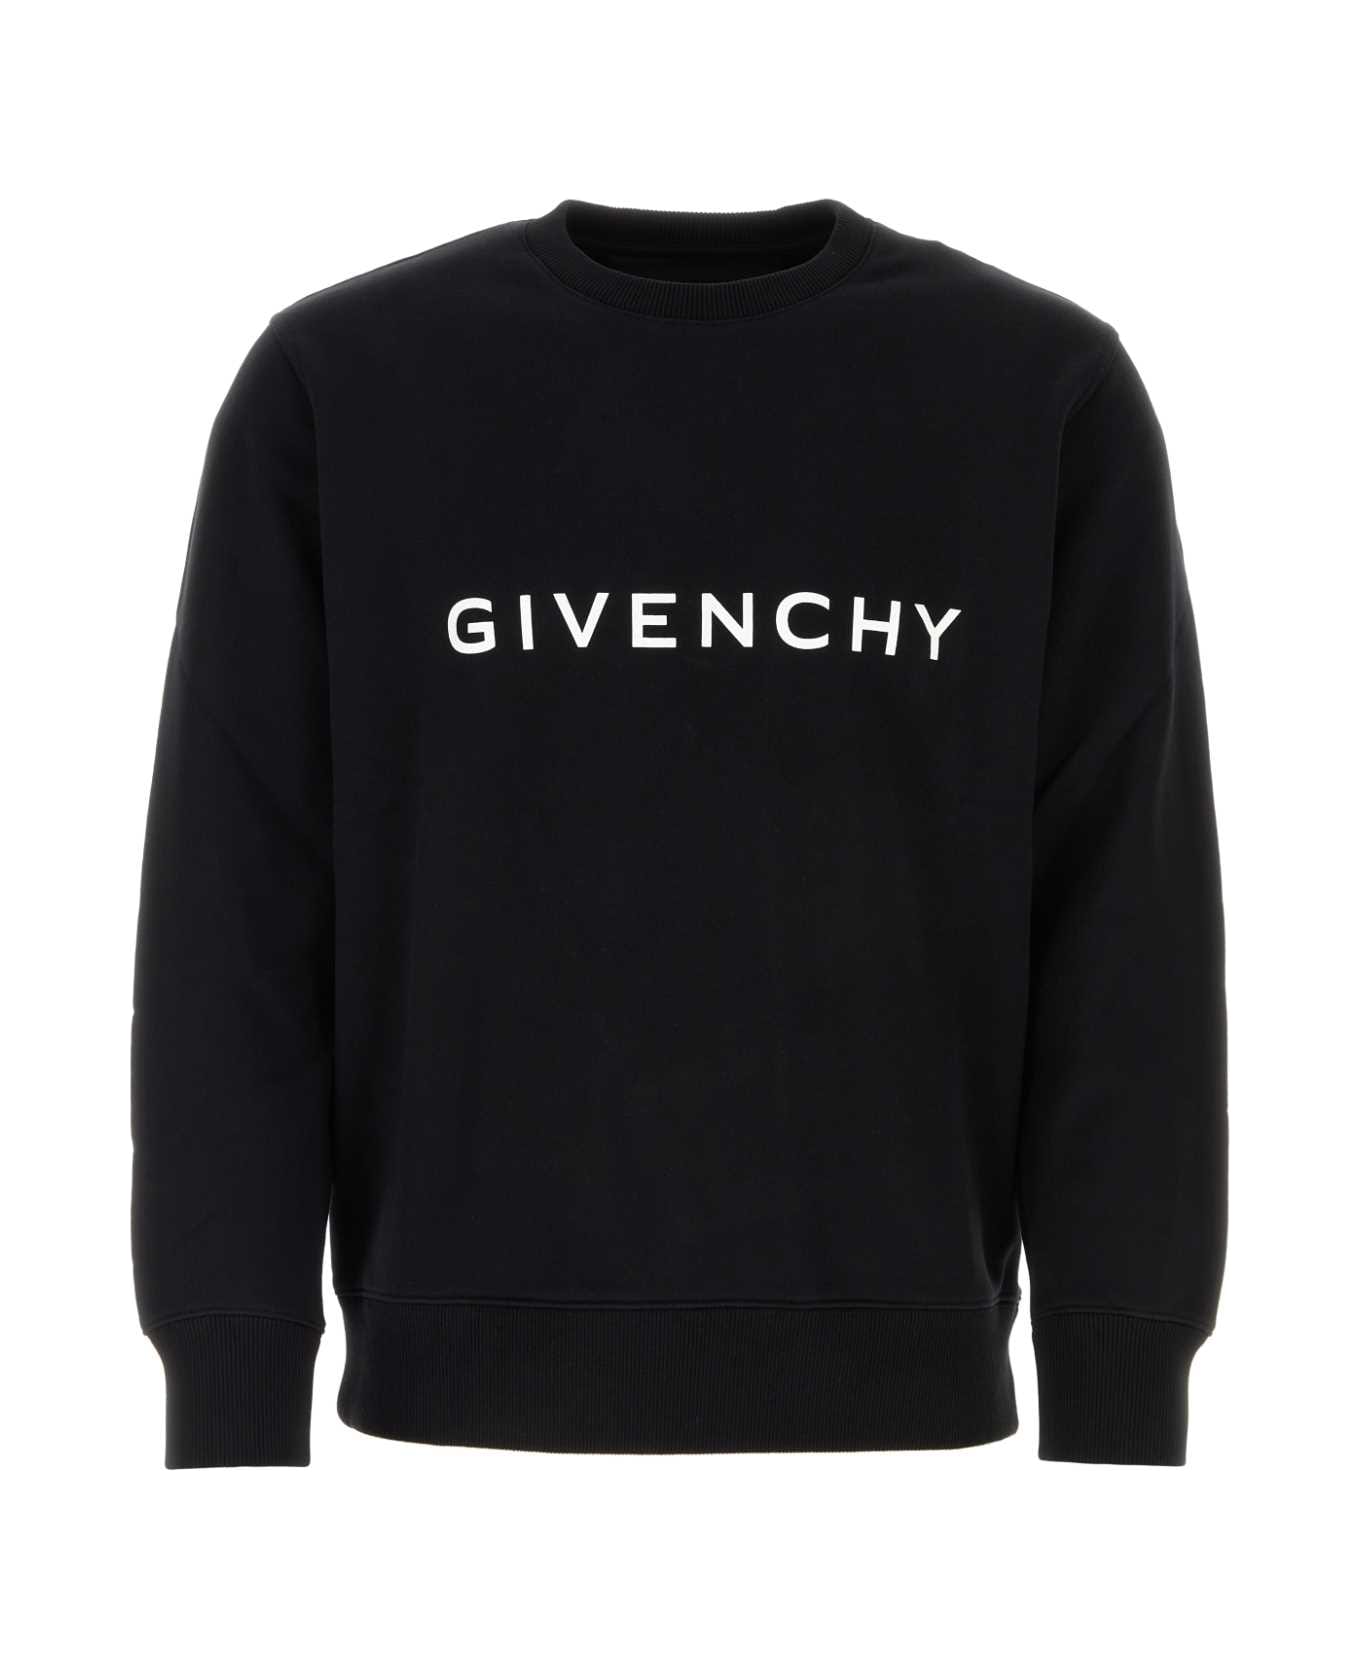 Givenchy Black Cotton Sweatshirt - 001 フリース